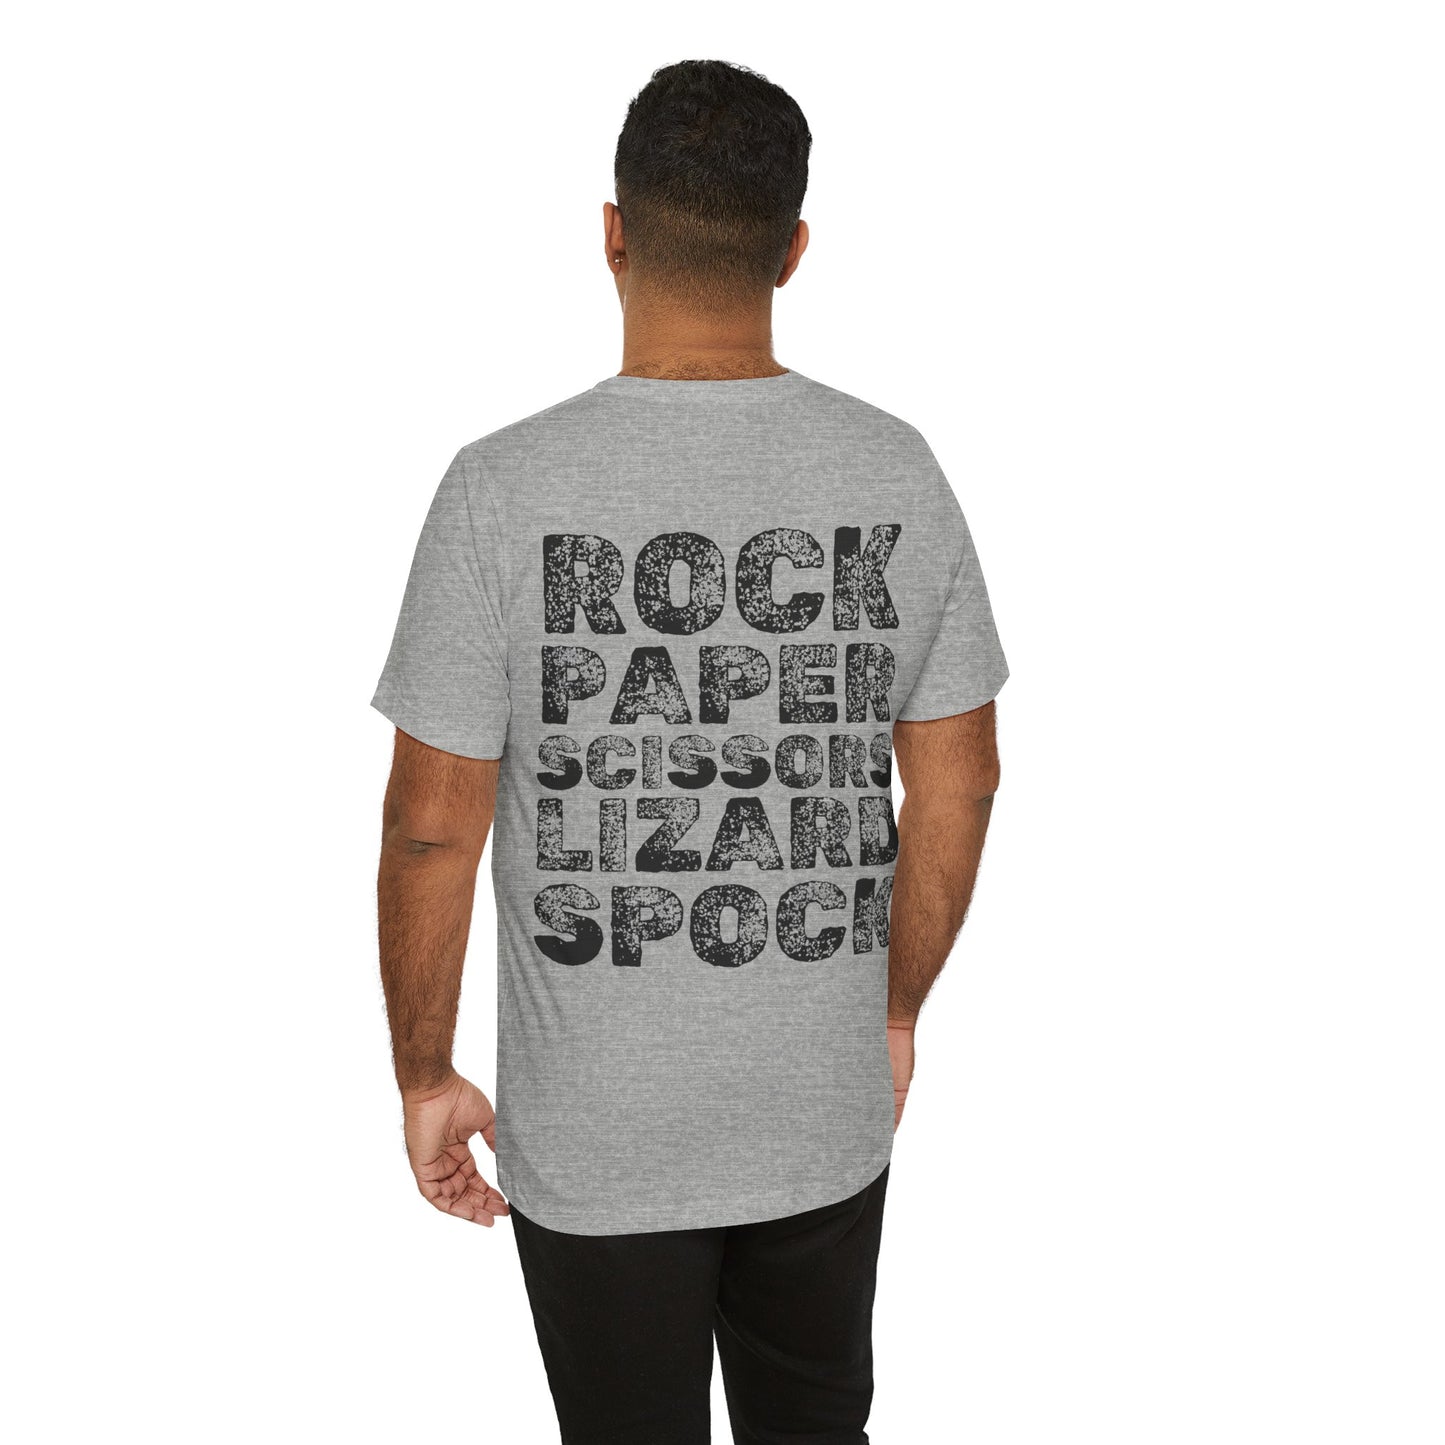 Rock Paper Scissors Lizard Spock T-shirt - Big Bang Theory